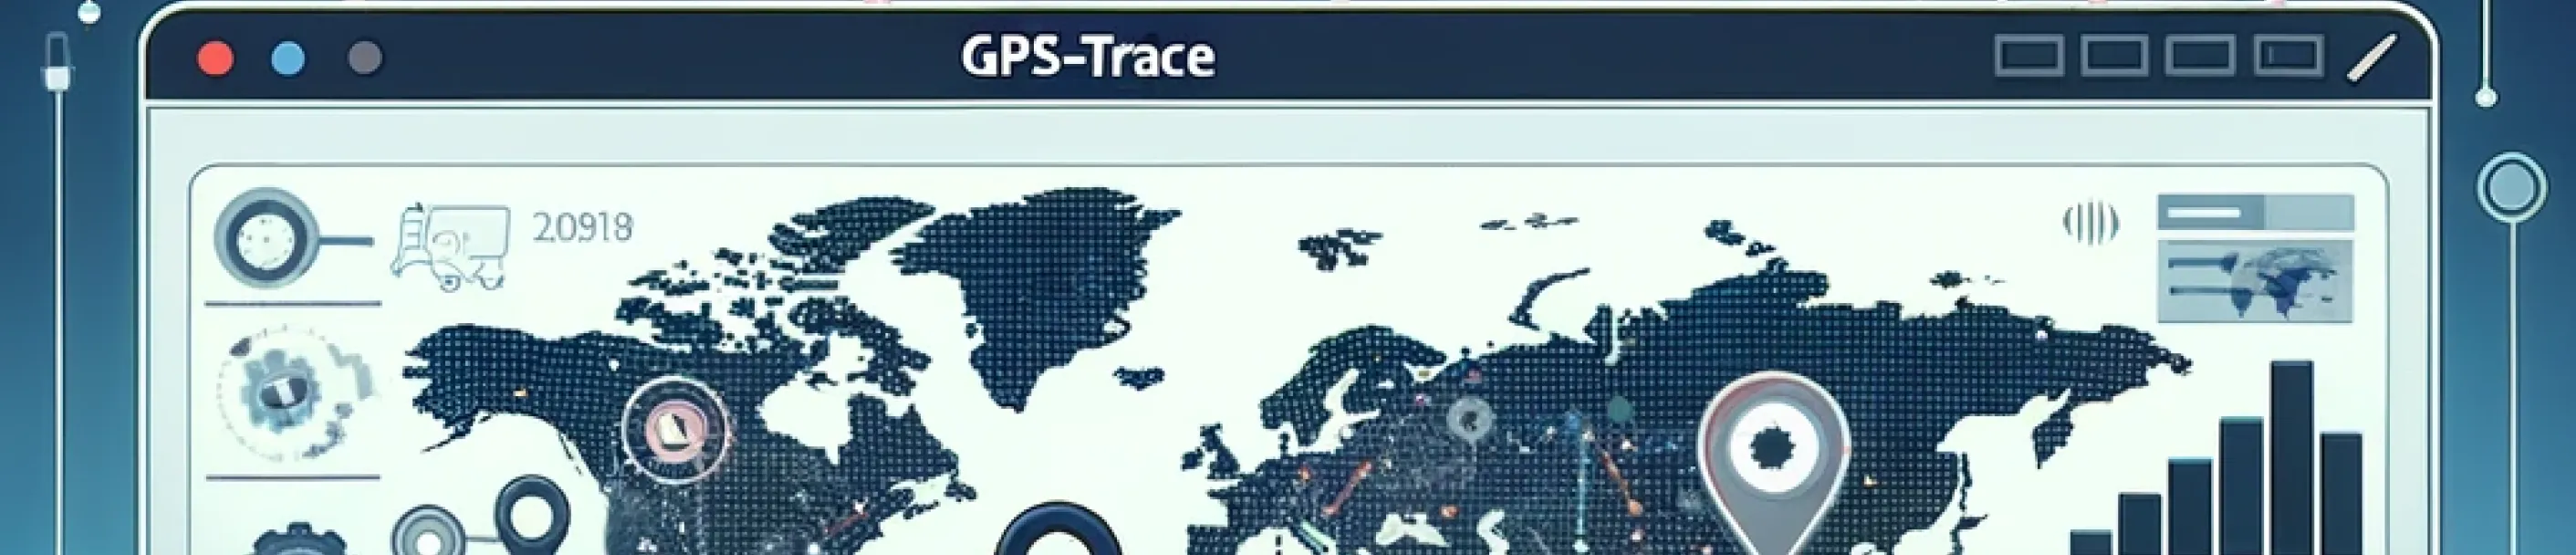 GPS-Trace partner network